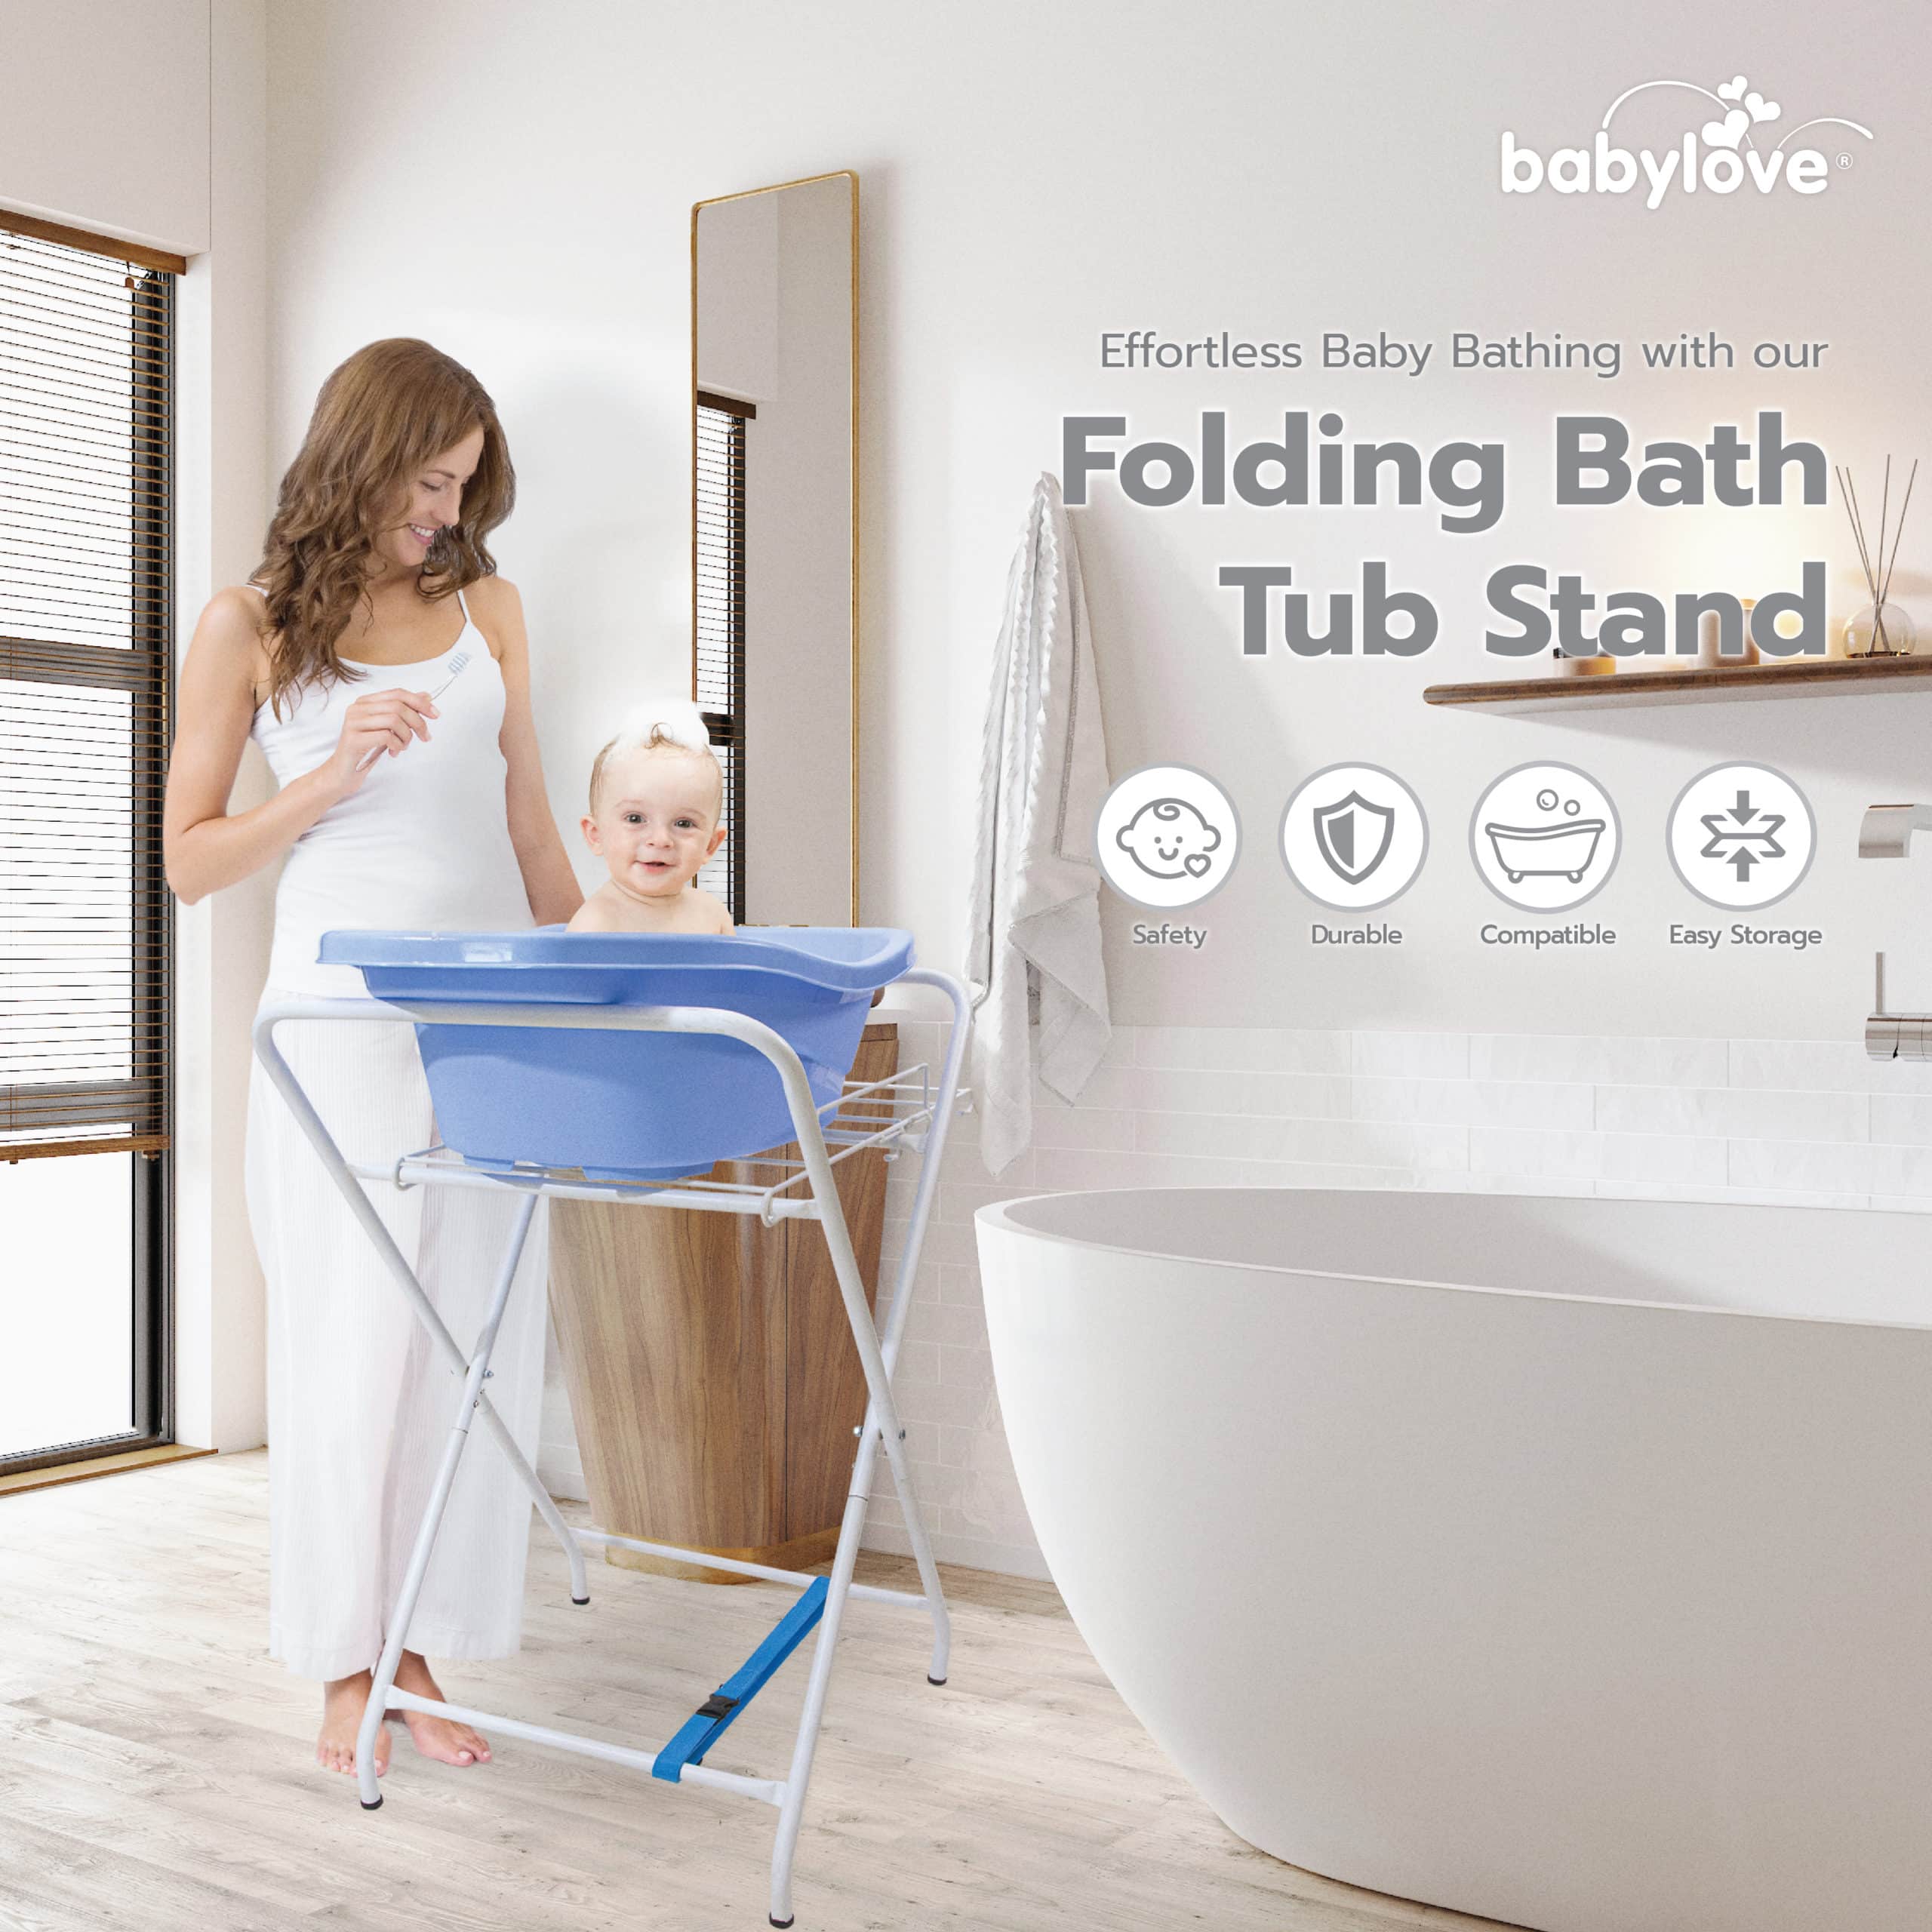 Bath-tub-Stand-07-scaled-1.jpg